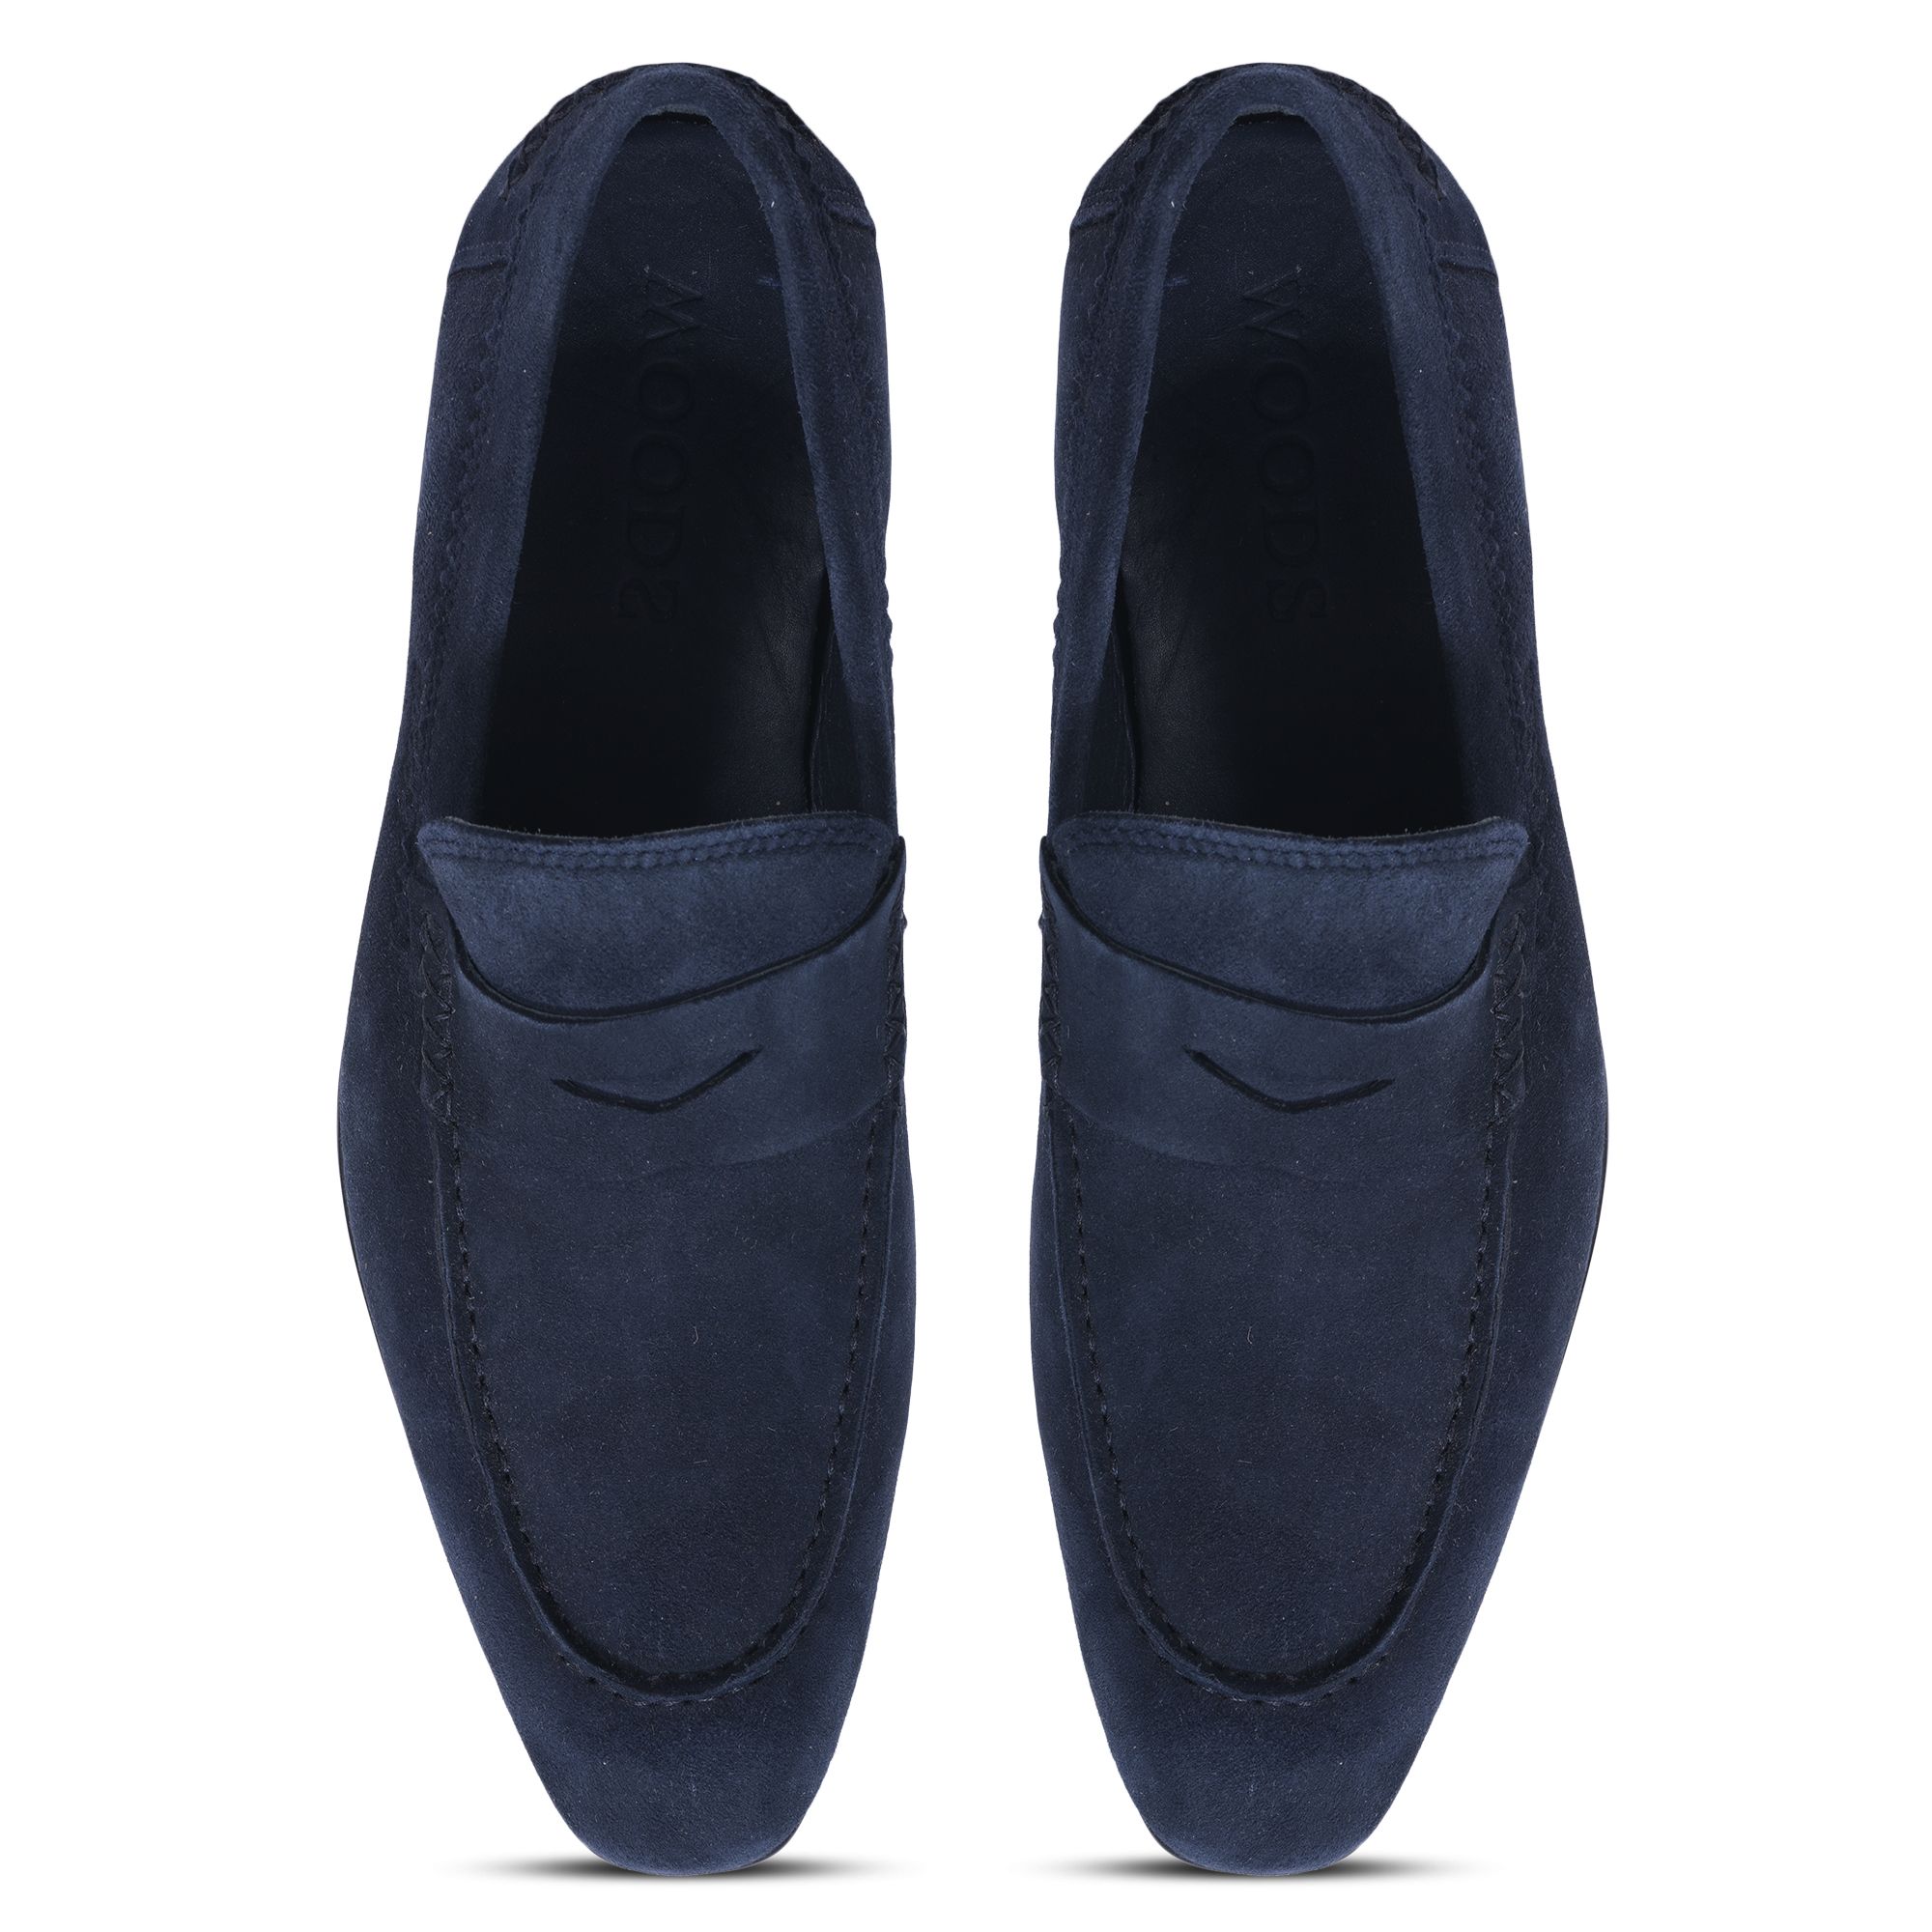 TWILIGHT BLUE formal loafers